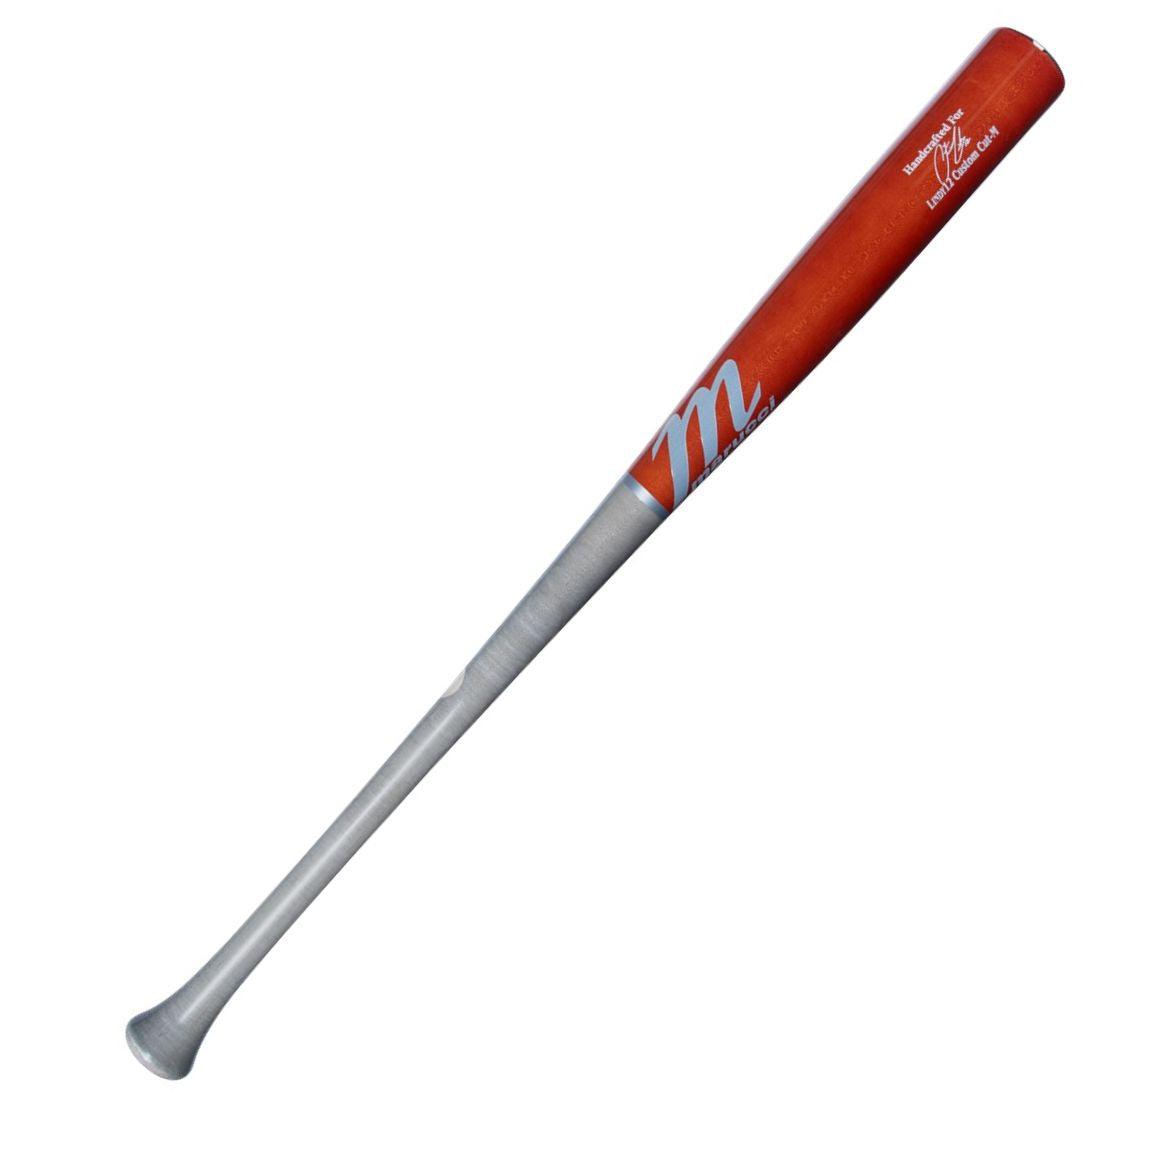 Marucci Francisco Lindor "LINDY12" Pro Exclusive Maple Baseball Bat